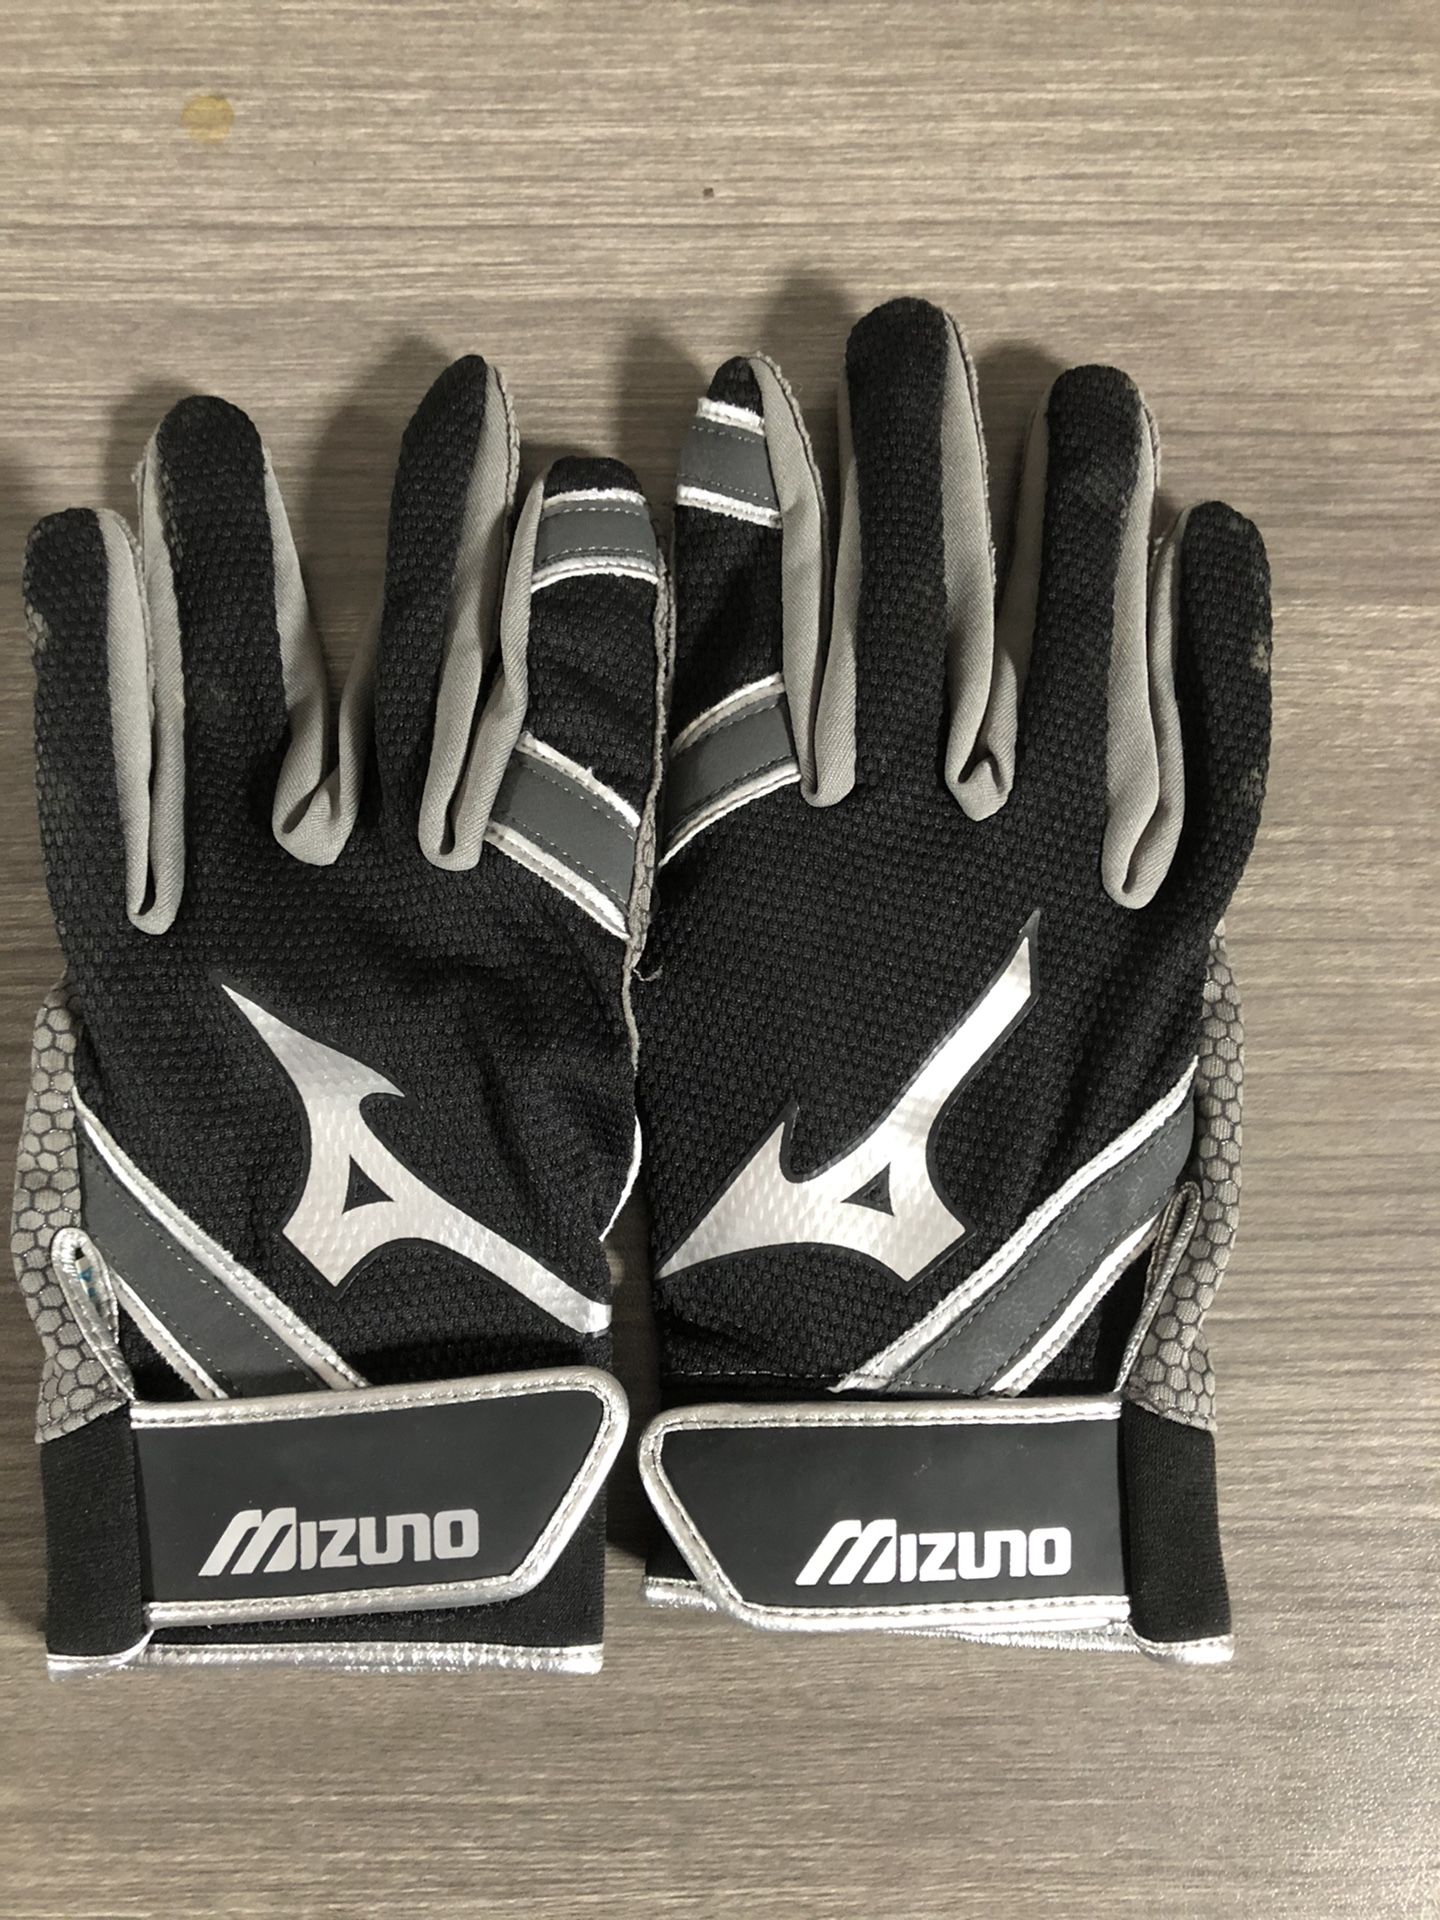 Mizuno Baseball / Softball Batting Gloves